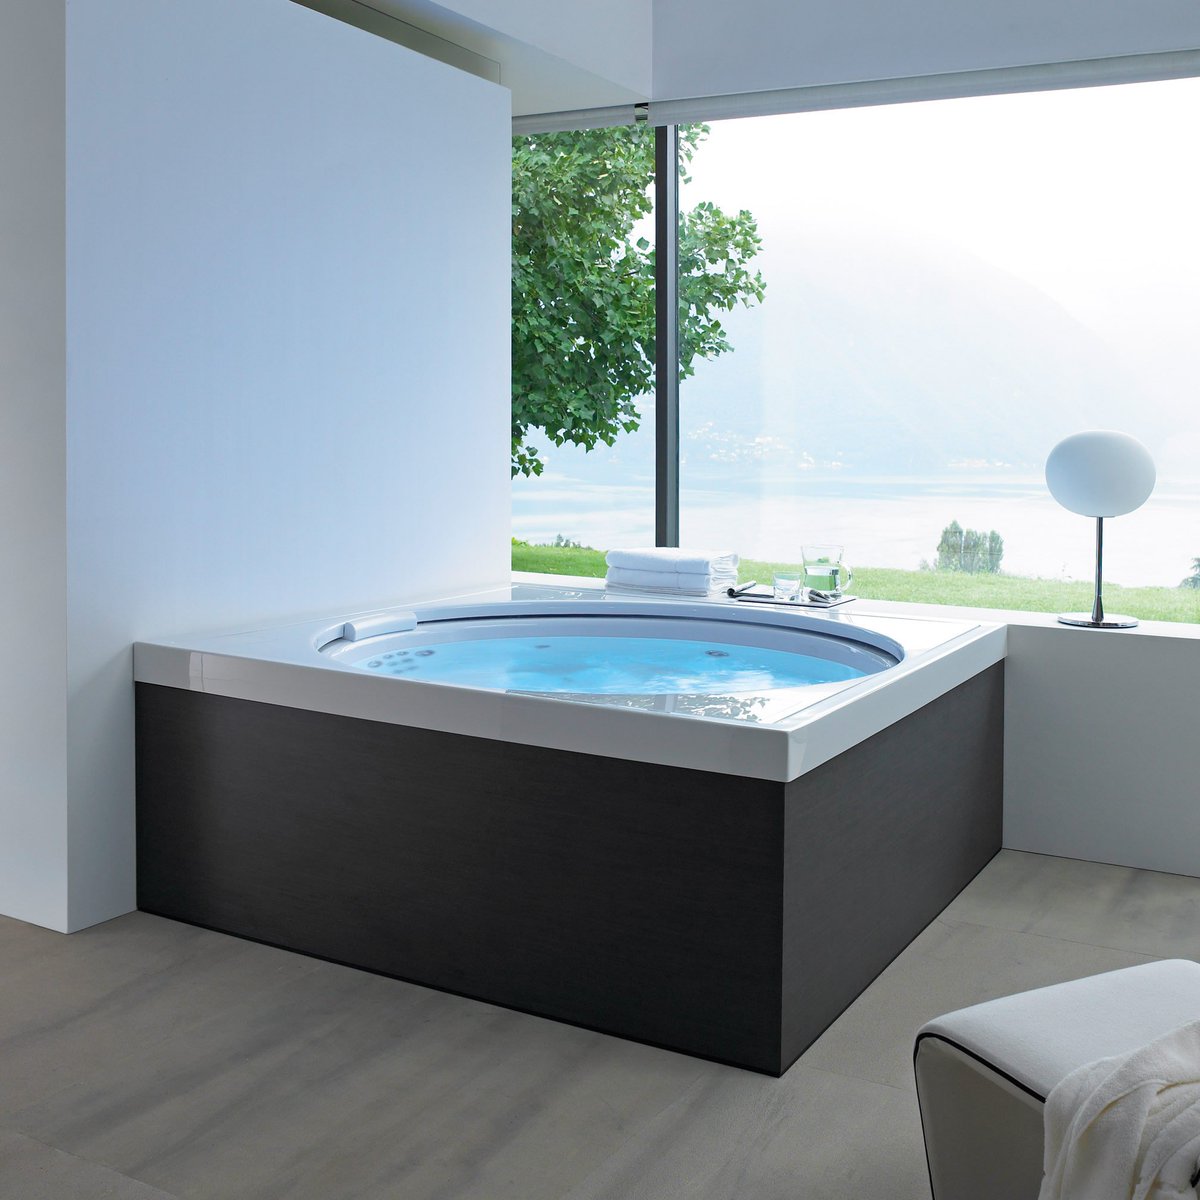 Experience pure wellness with the BlueMoon whirlpool bath. #bath #wellness #spa ow.ly/EaQ450uv8cT